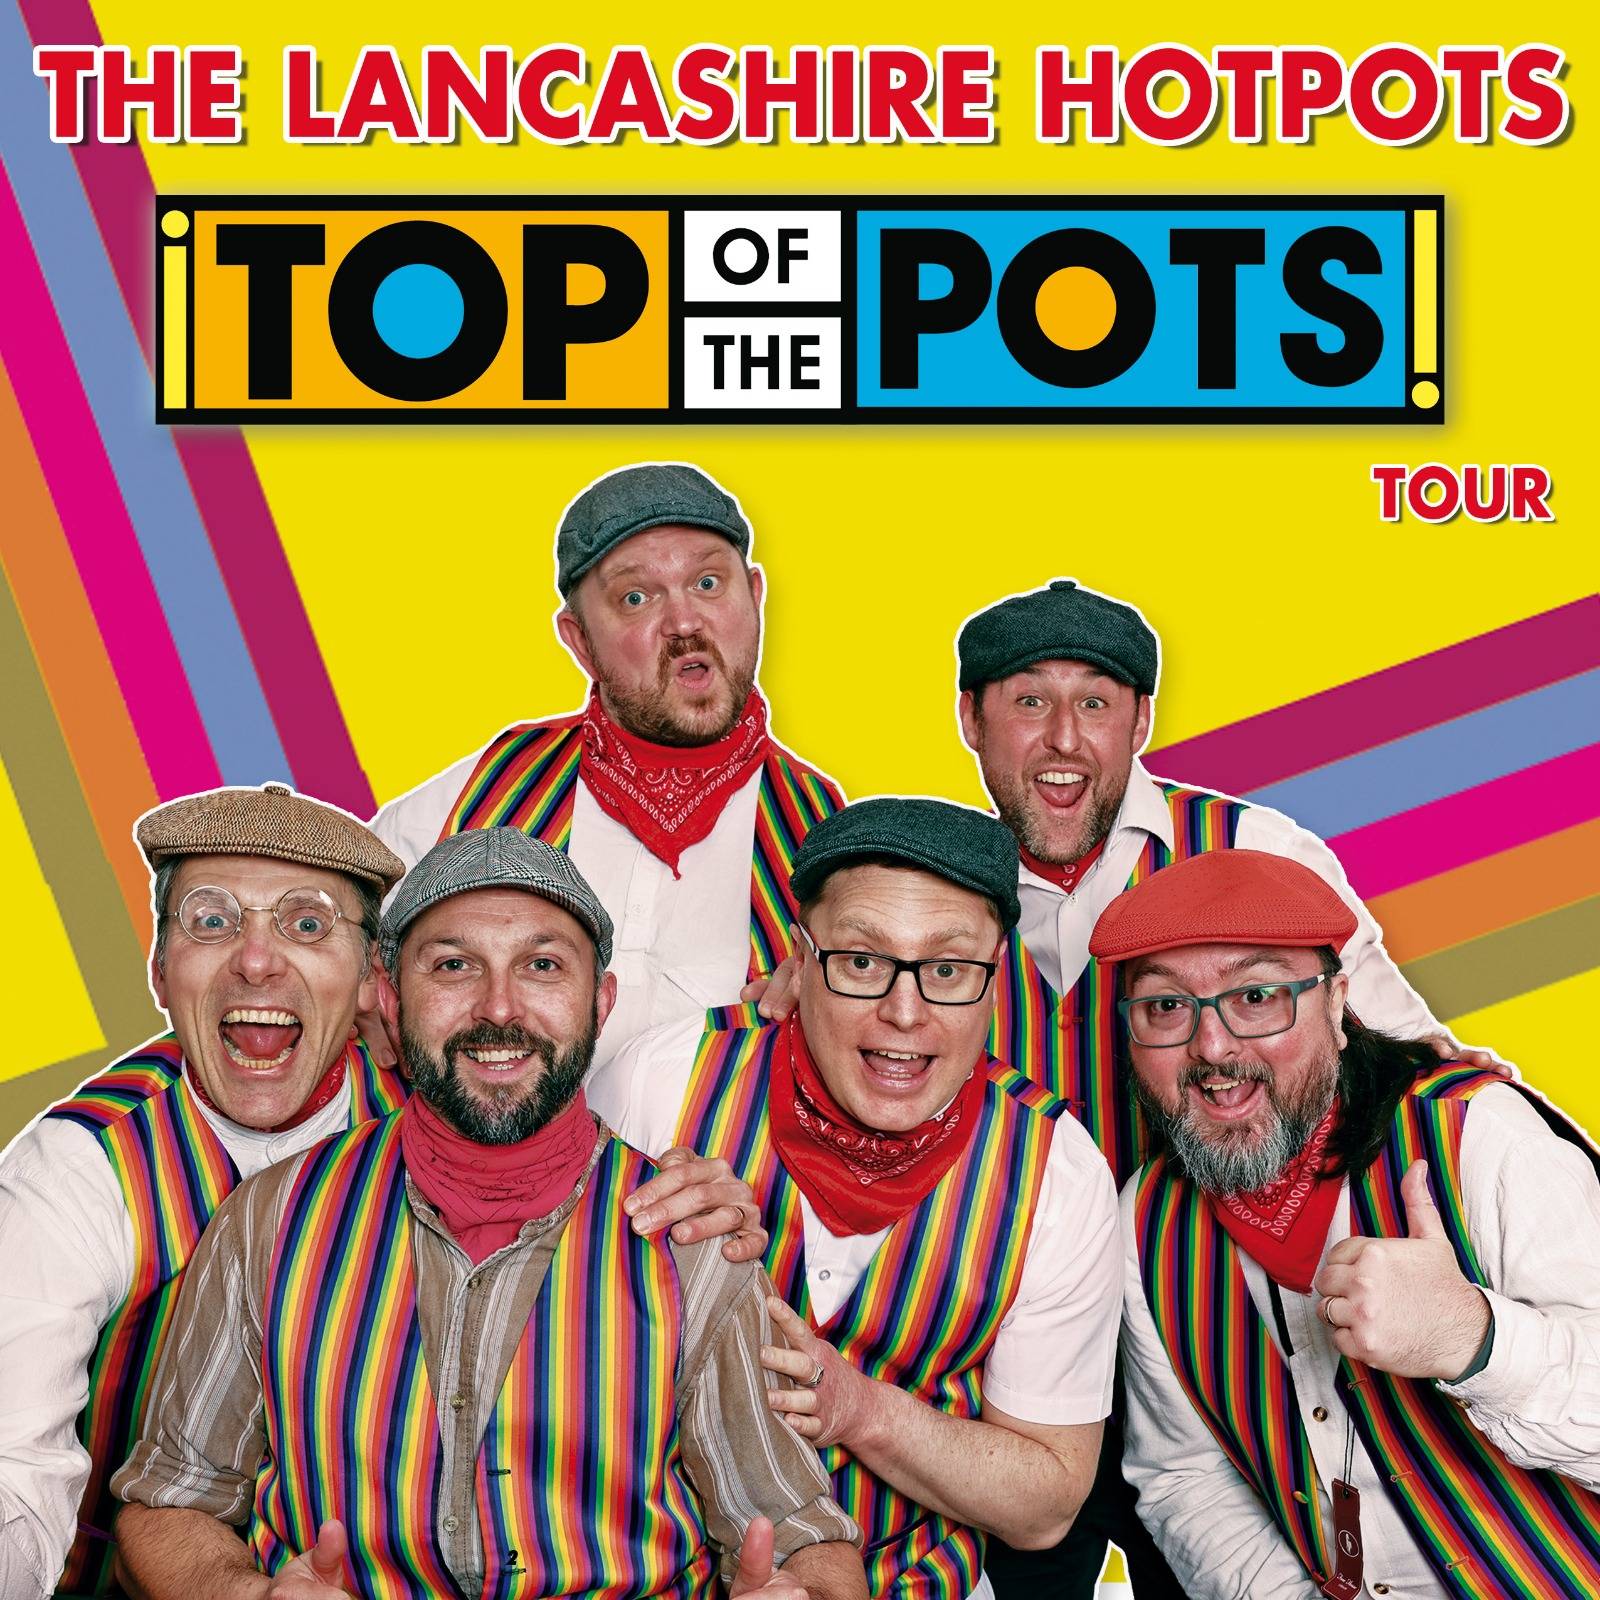 The Lancashire Hotpots Top Of The Pots tour promotional image